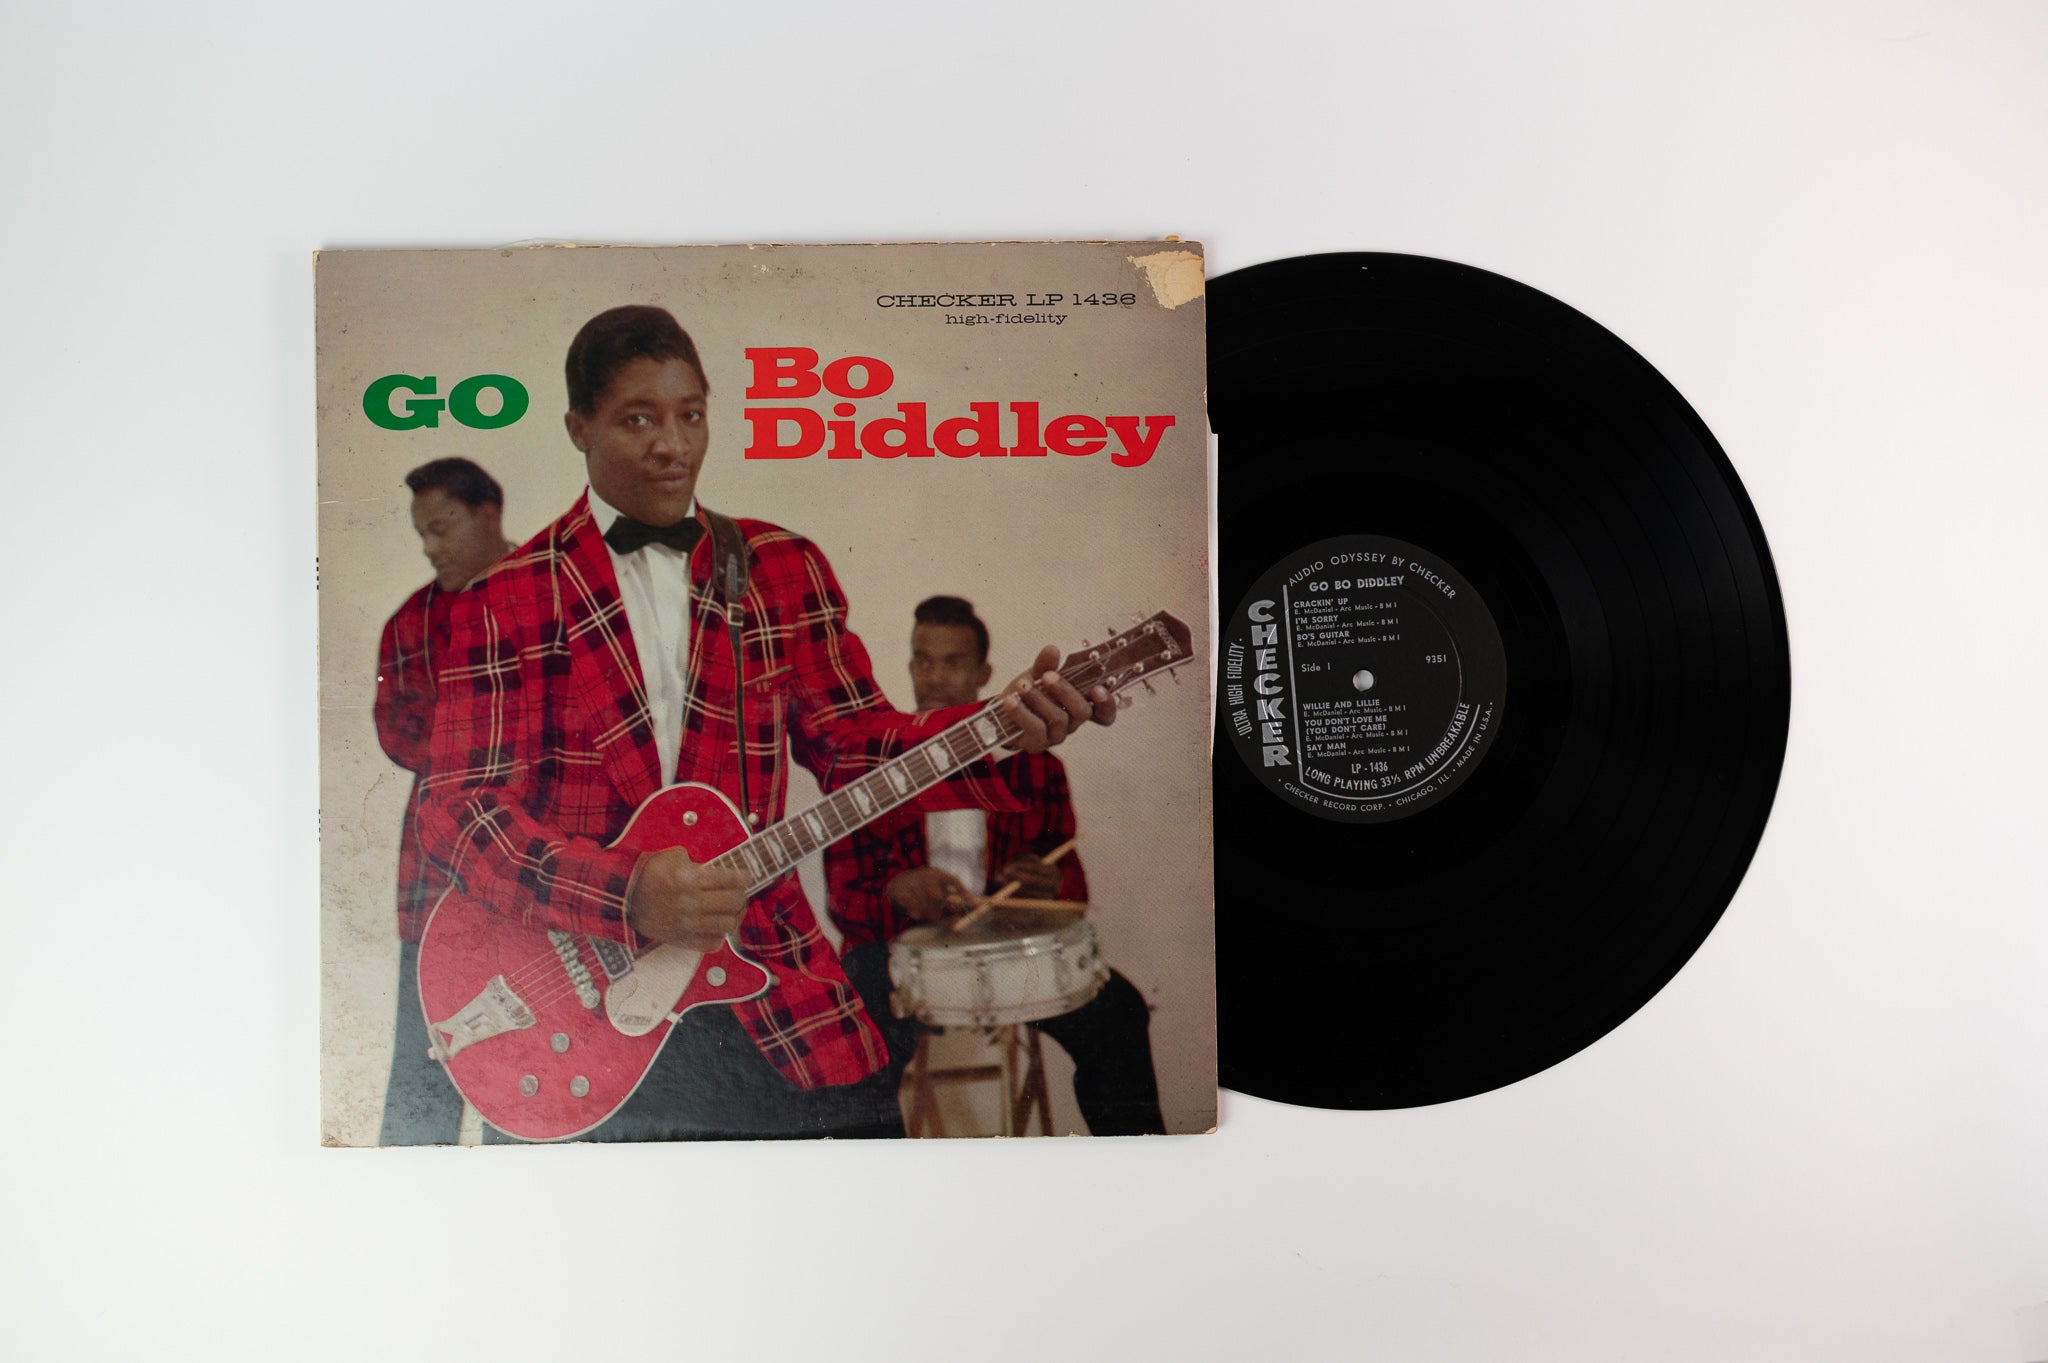 Bo Diddley - Go Bo Diddley on Checker Black Label Mono